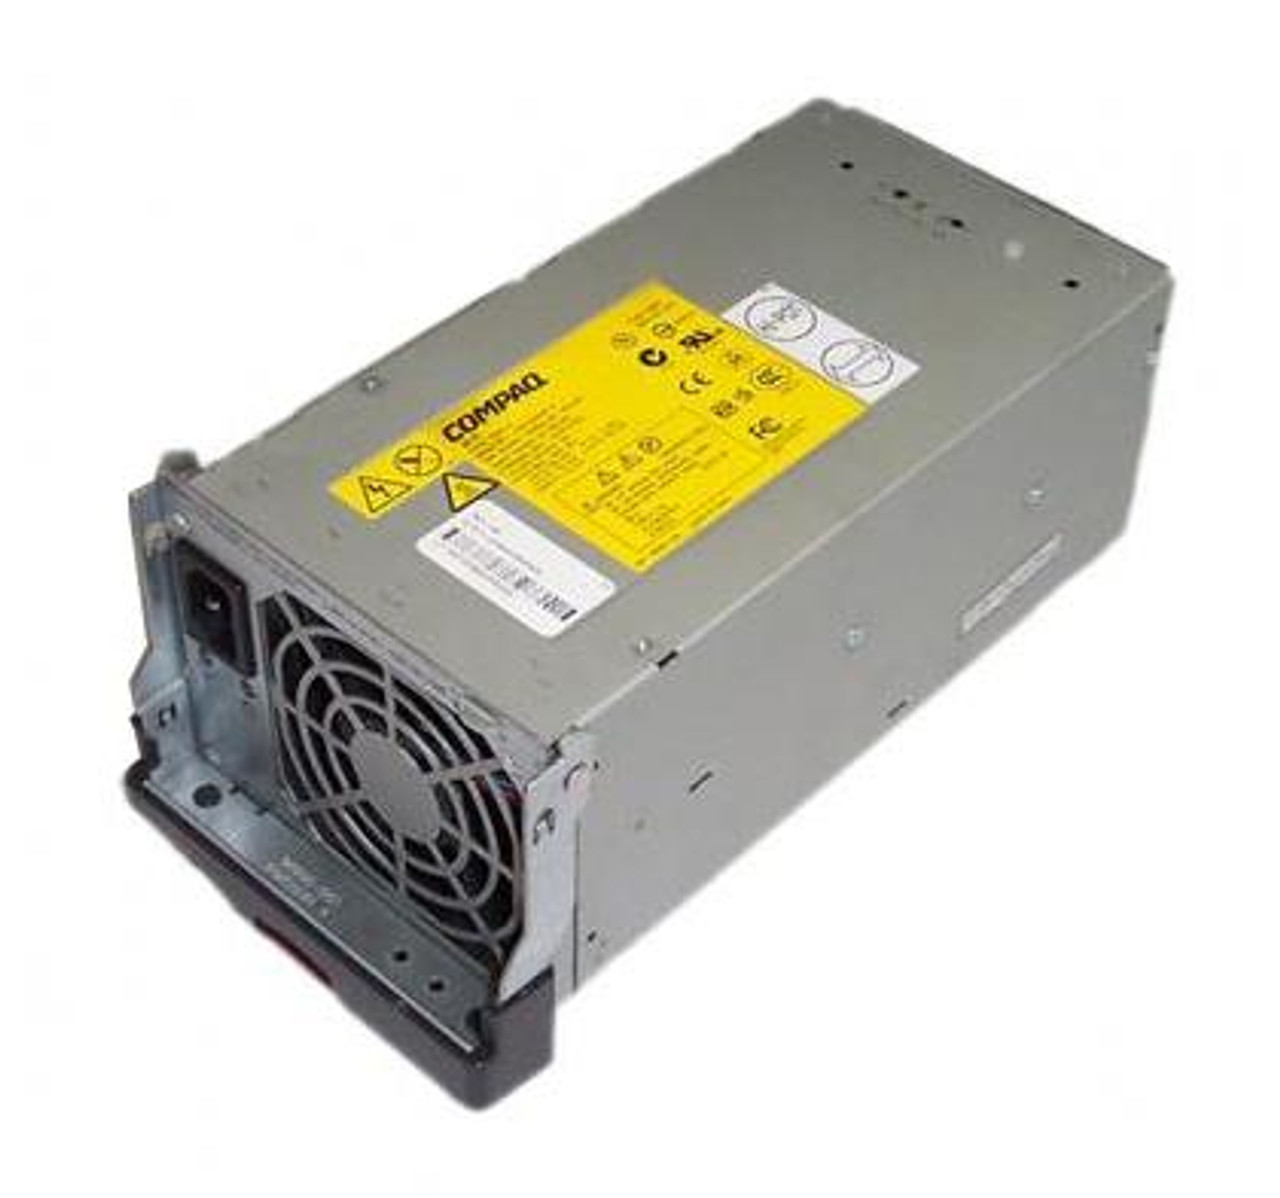 236845-021 Compaq 600-Watts Redundant Hot Swap Power Supply for ProLiant ML530 and ML570 G2 Server